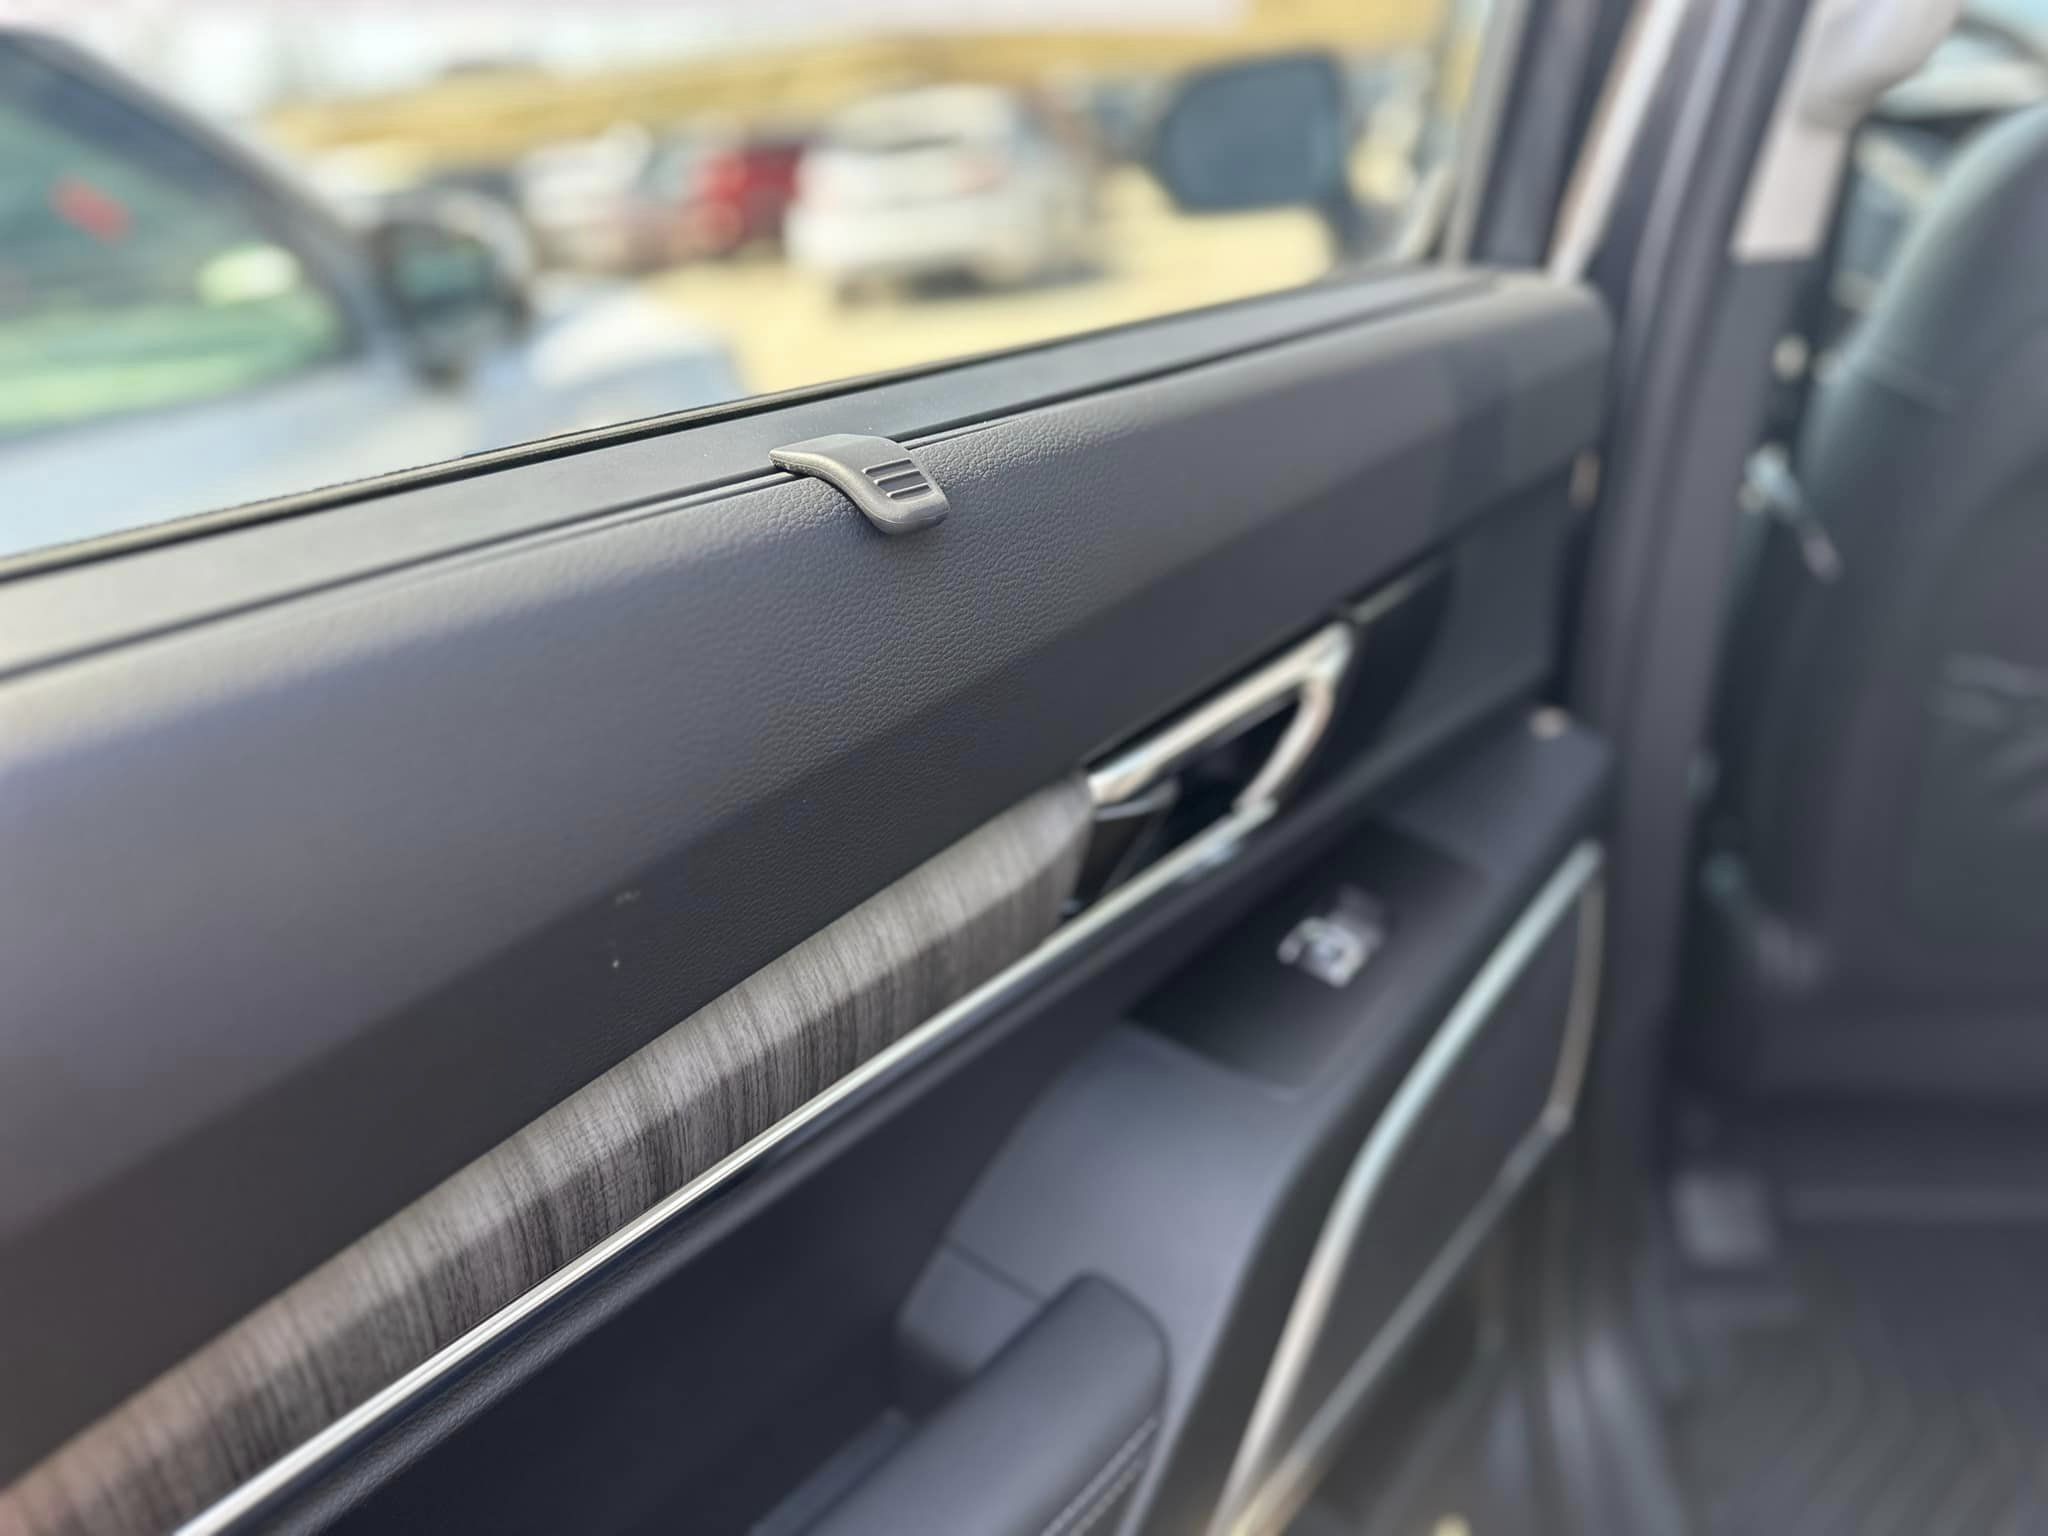 2023 Kia Telluride - EX Trim - Gravity Gray - Passenger Window Shades